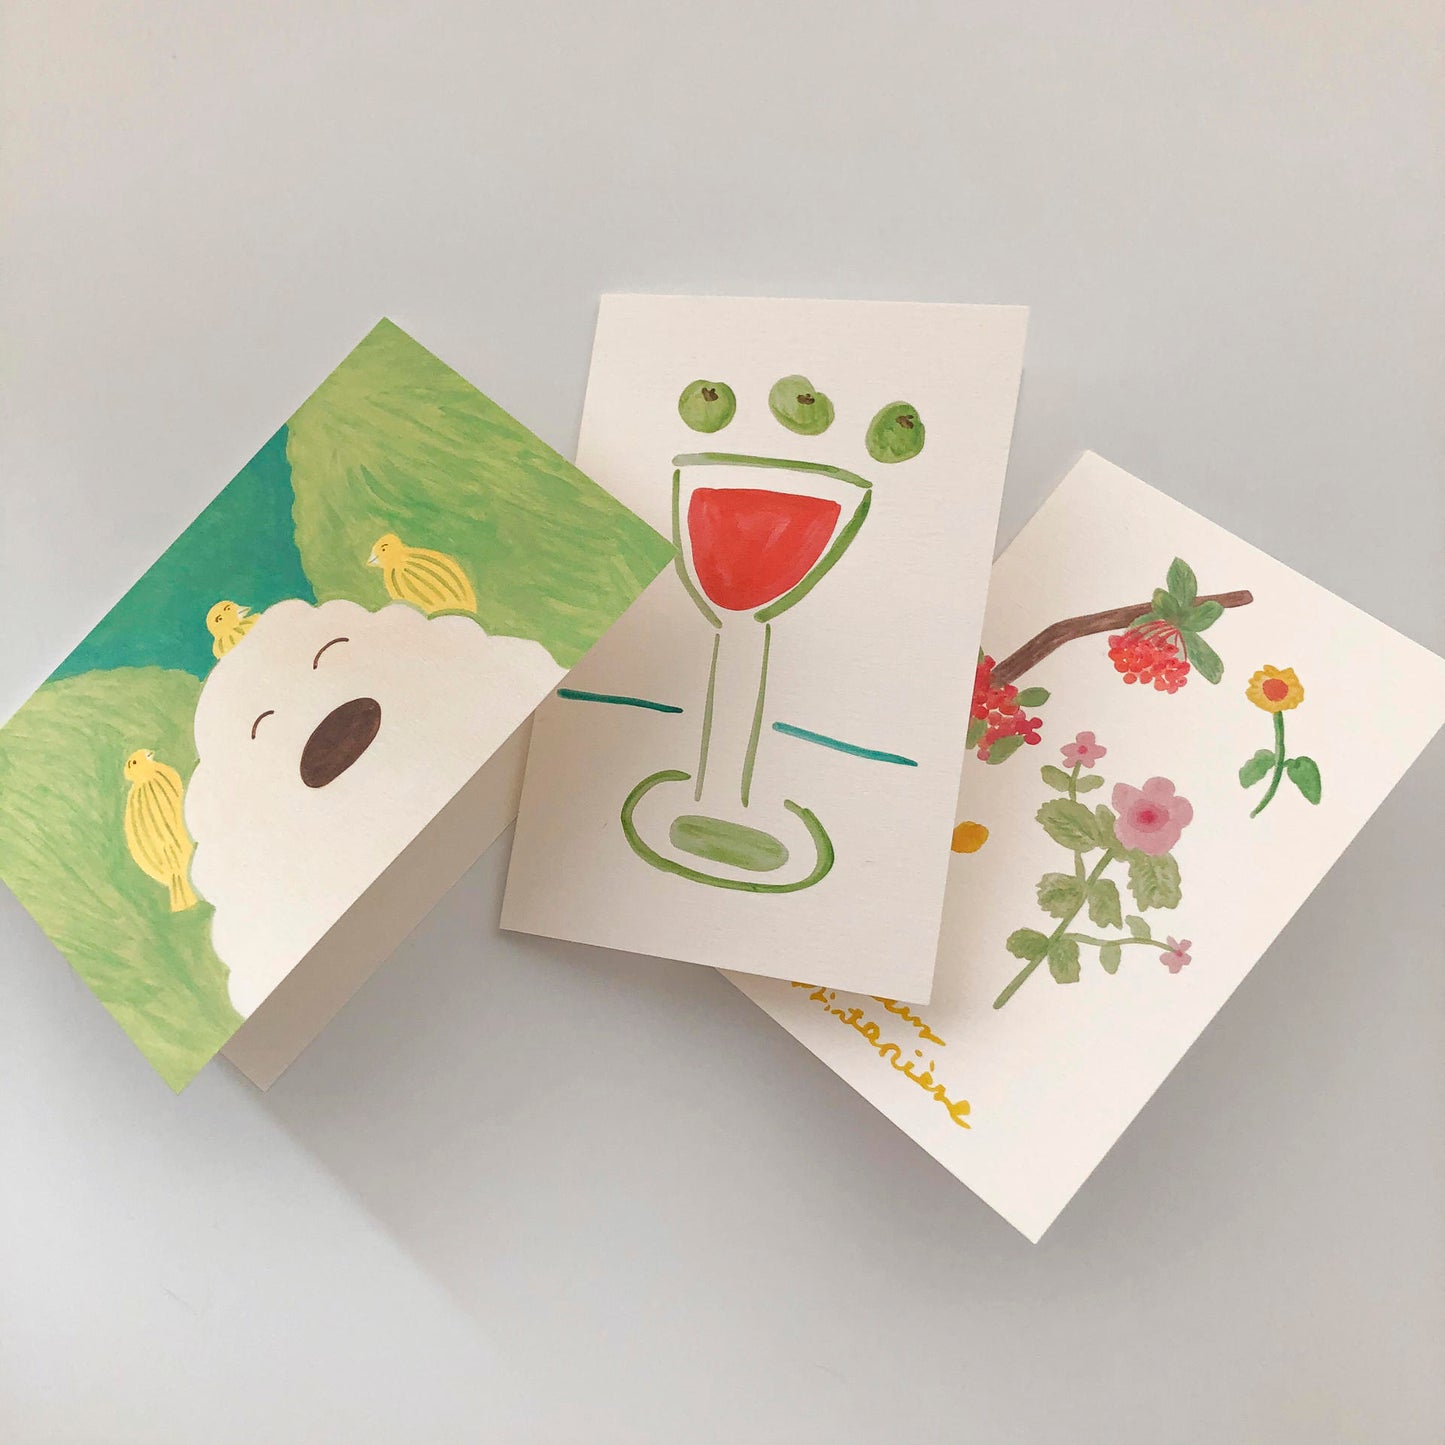 Greeting Card - Fleur Printanière